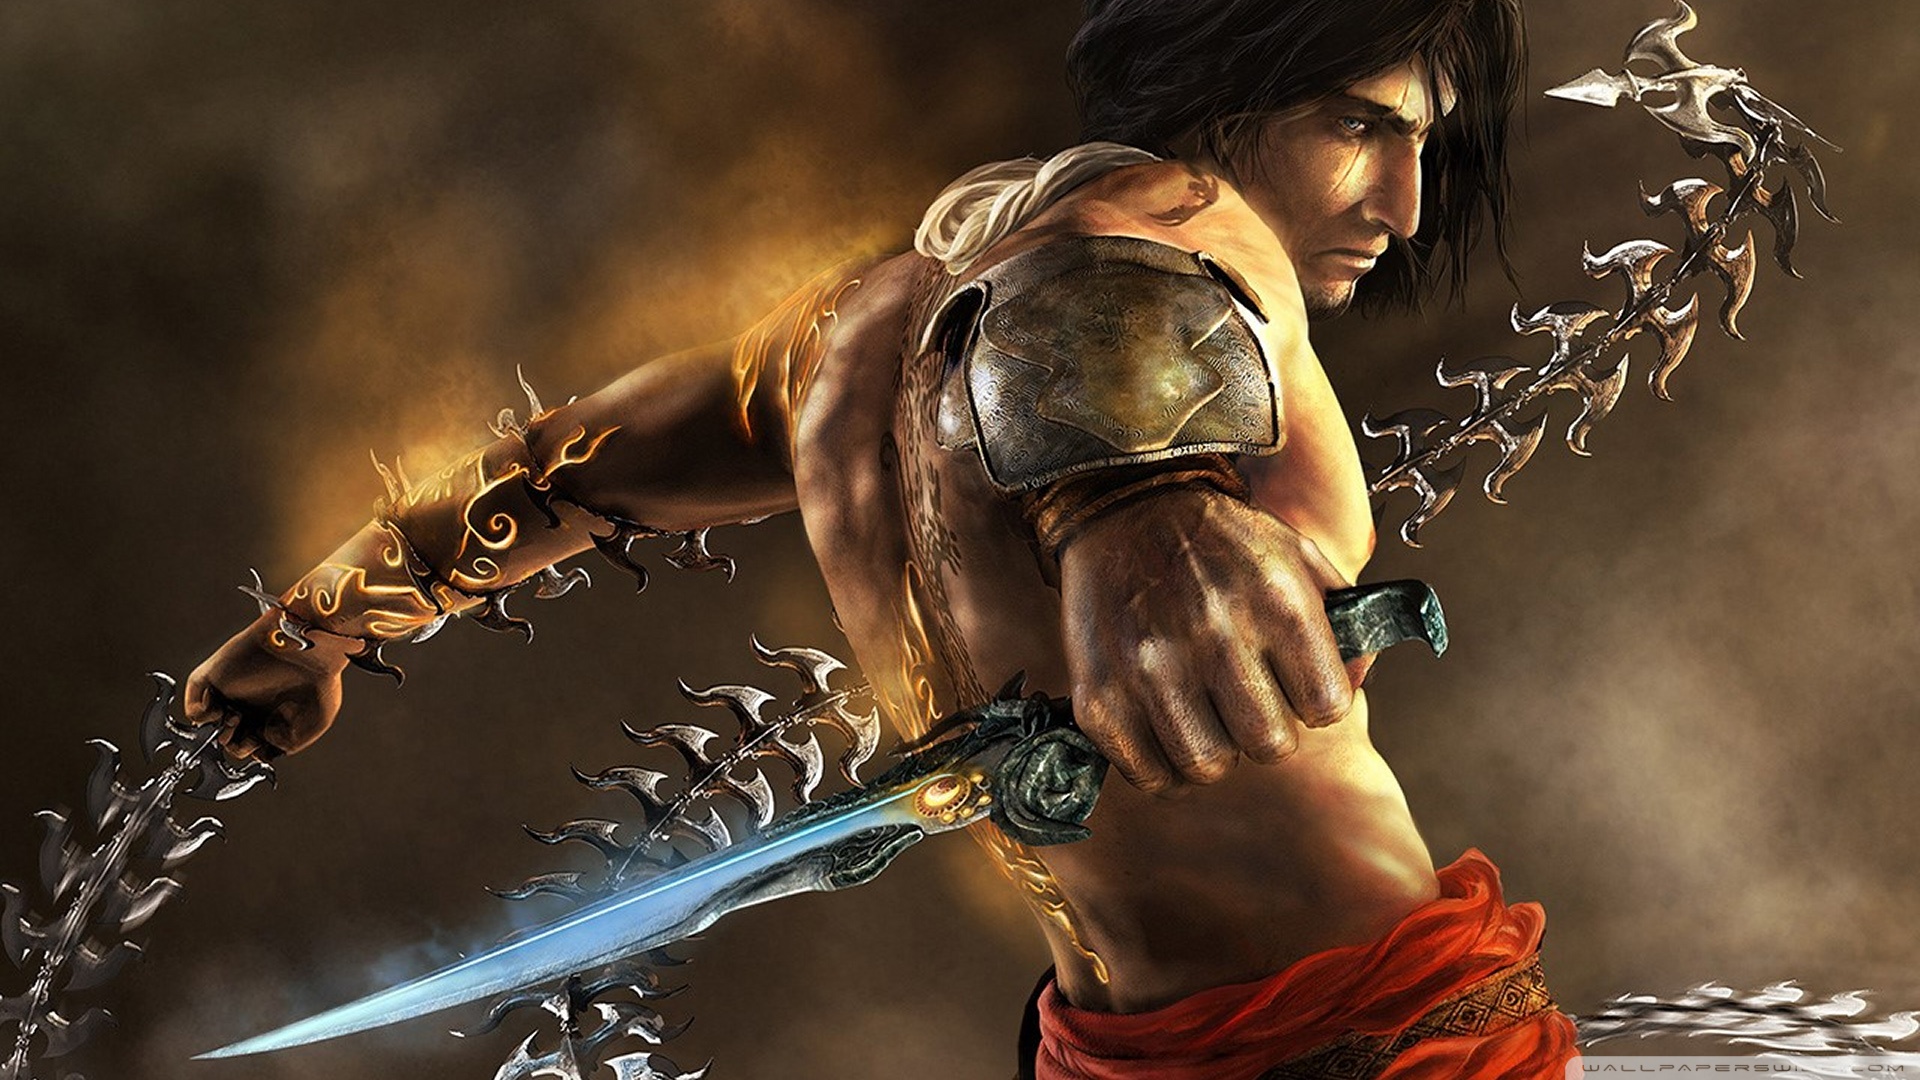 Prince Of Persia The Two Thrones HD desktop wallpaper Widescreen